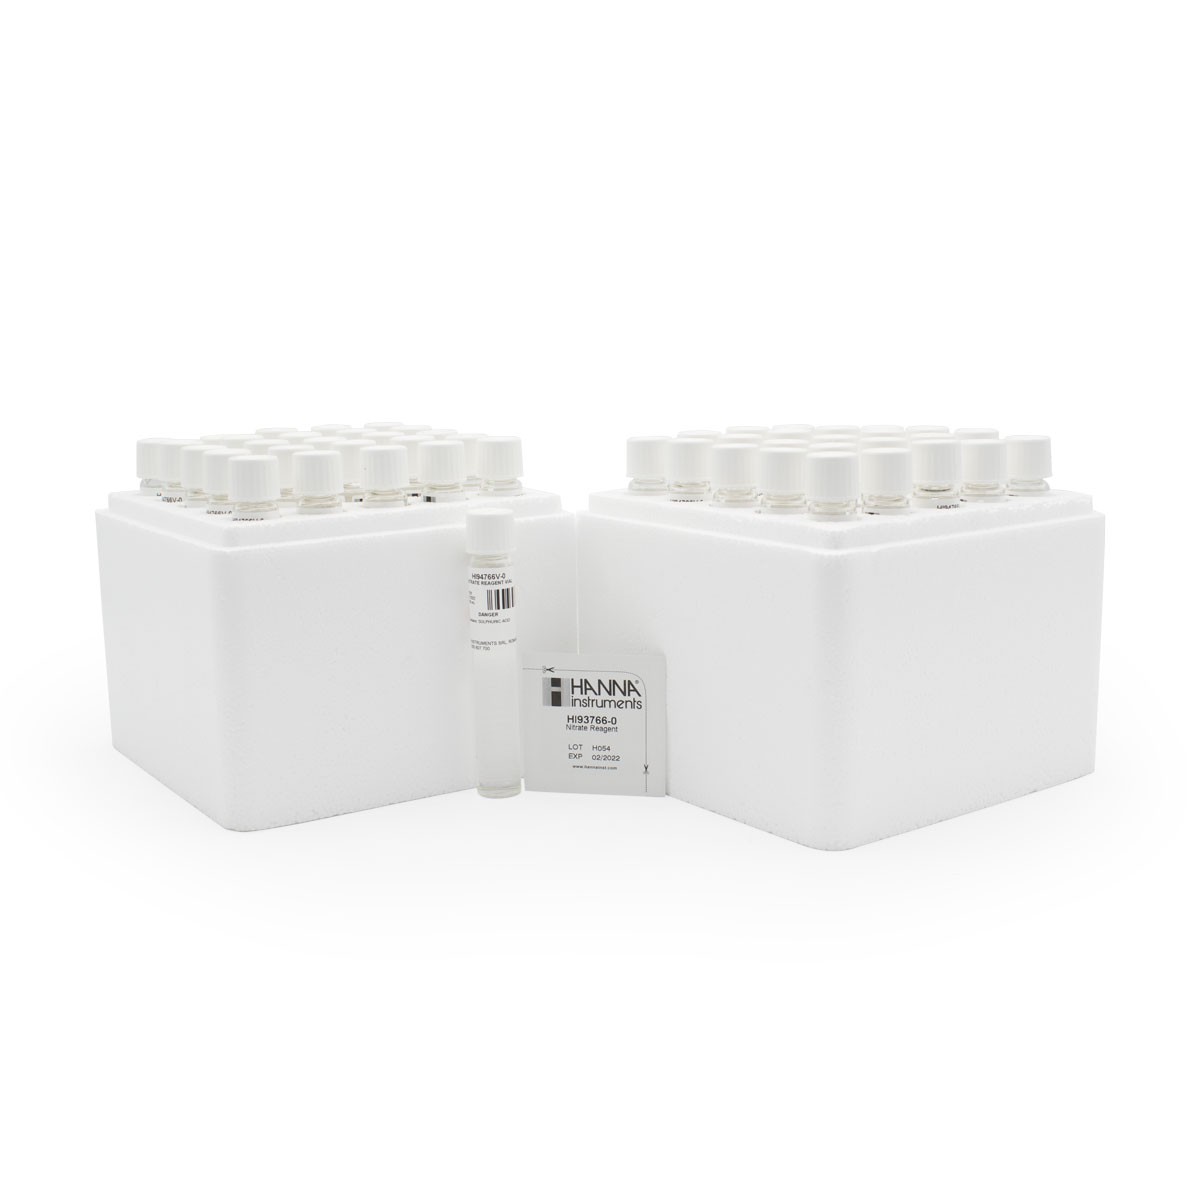 Nitrat, Chromotropsäure-Methode mit Barcode, 50 Tests